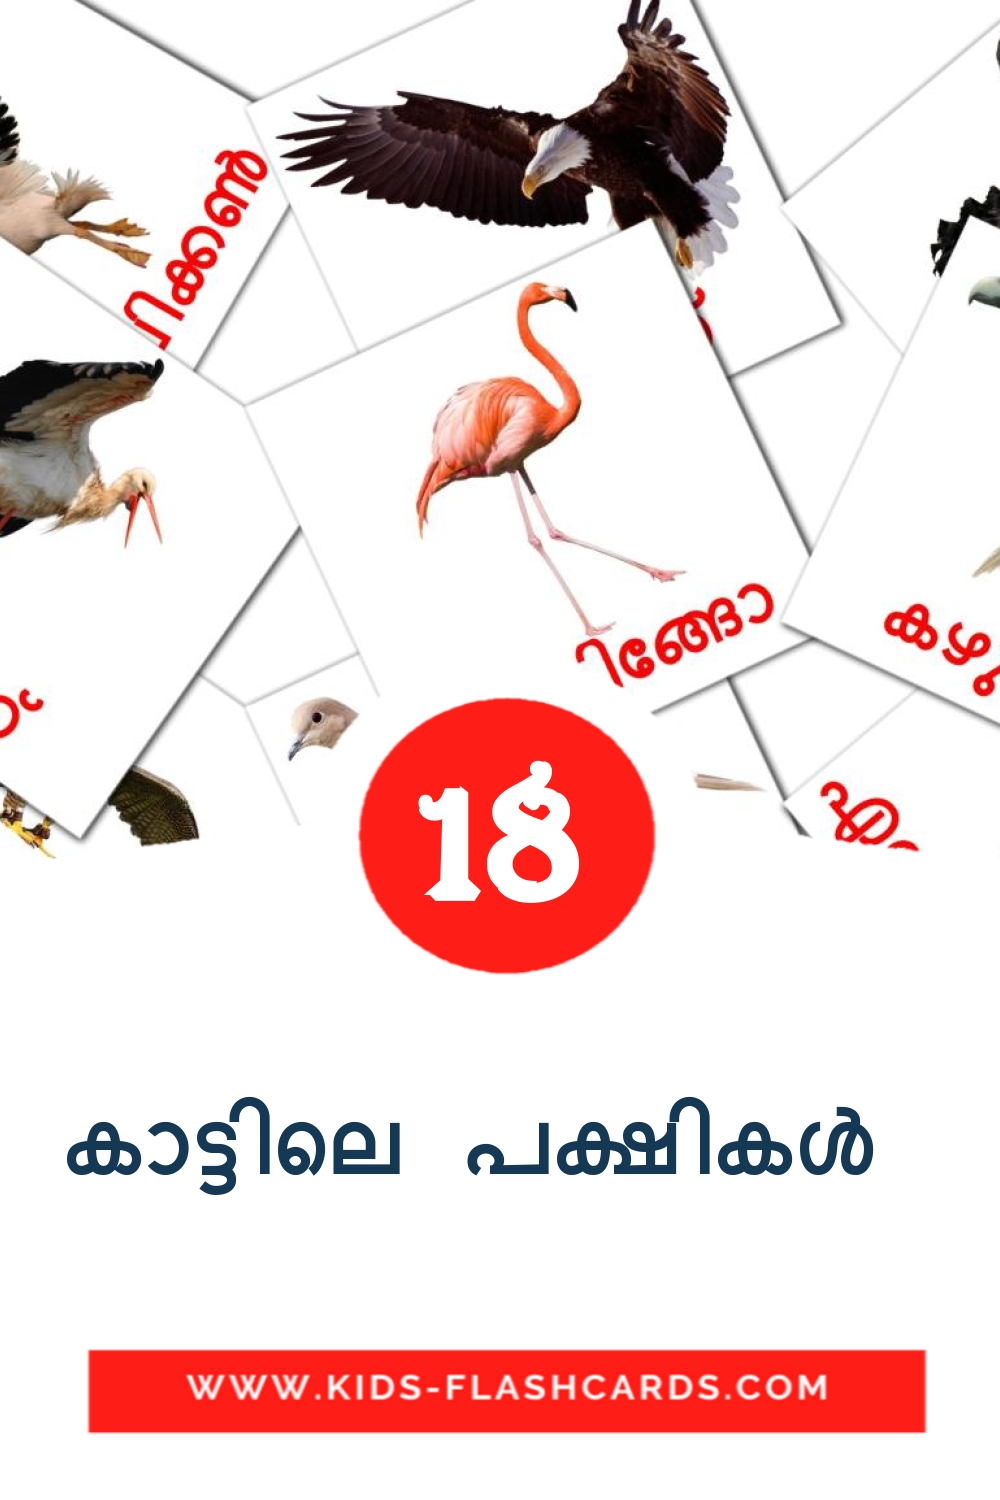 18 Cartões com Imagens de കാട്ടിലെ പക്ഷികൾ  para Jardim de Infância em malayalam